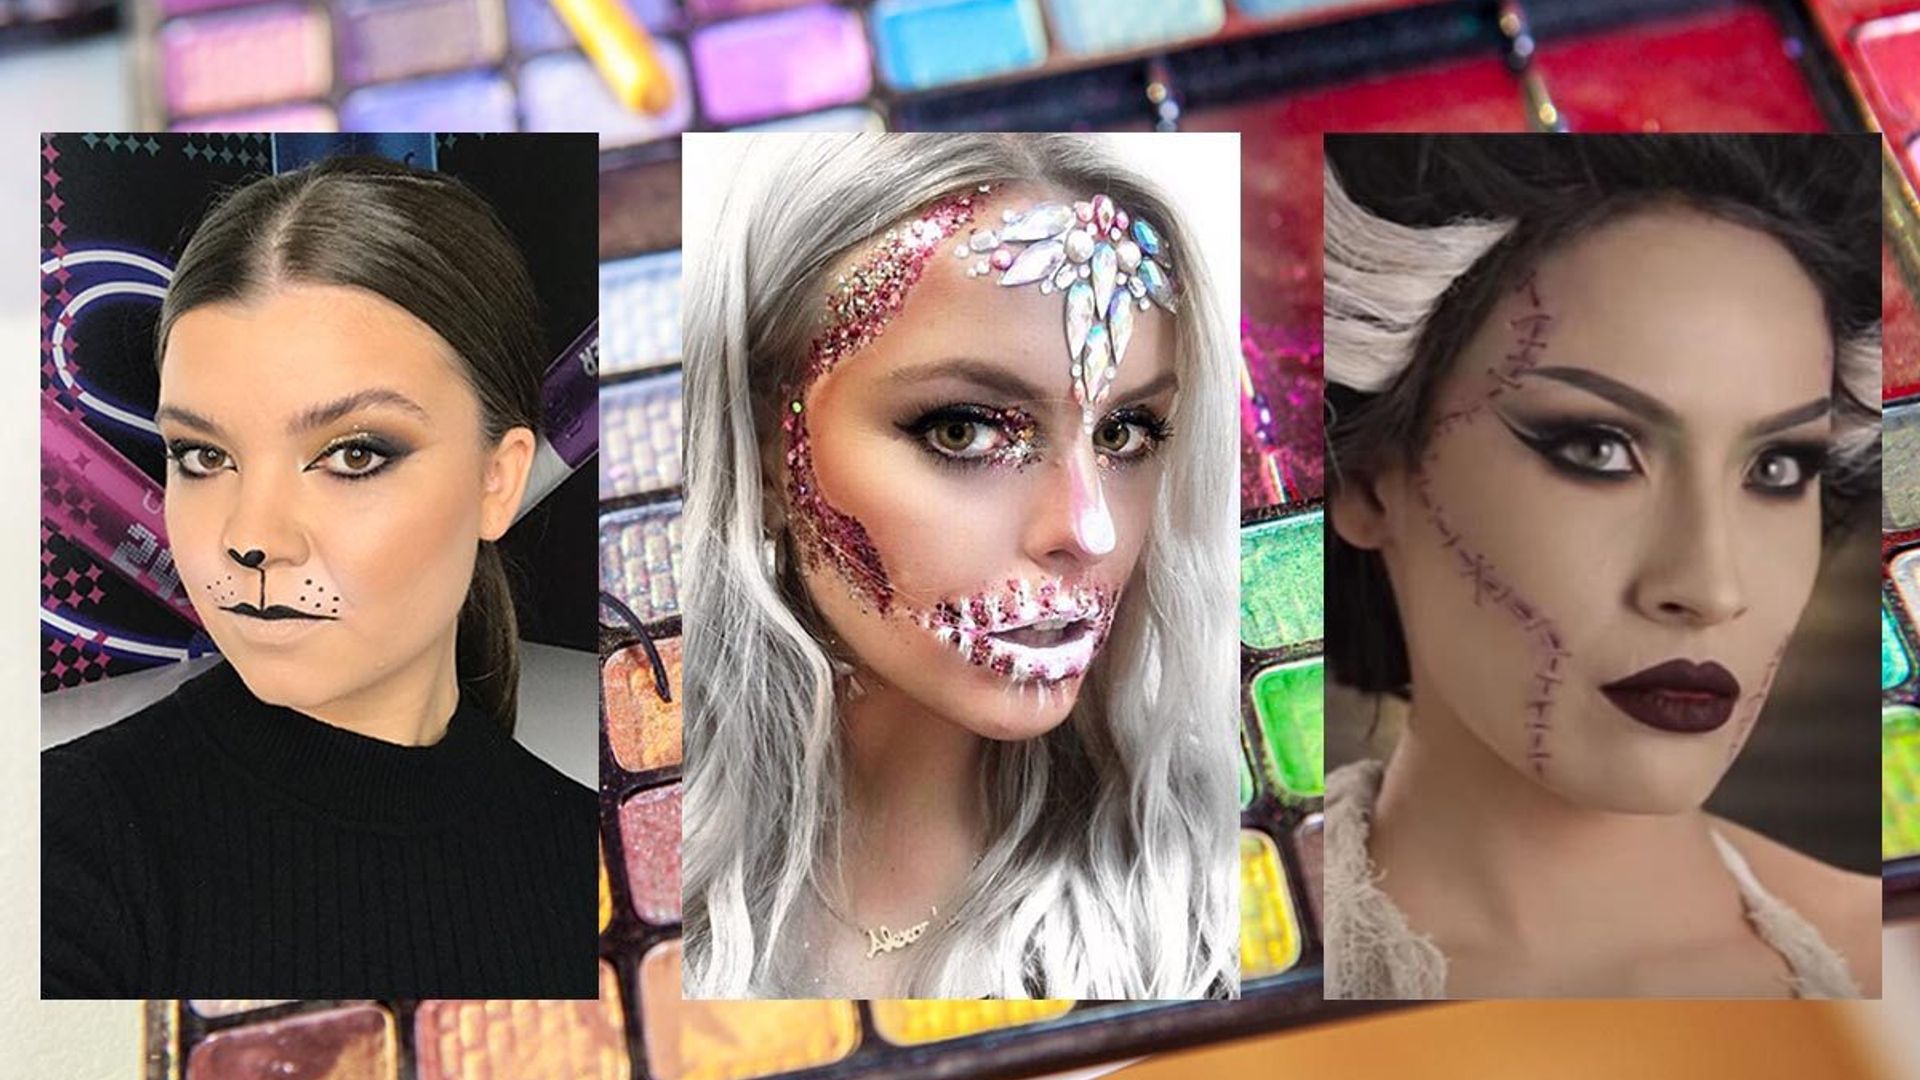 Halloween makeup ideas for the spooky season